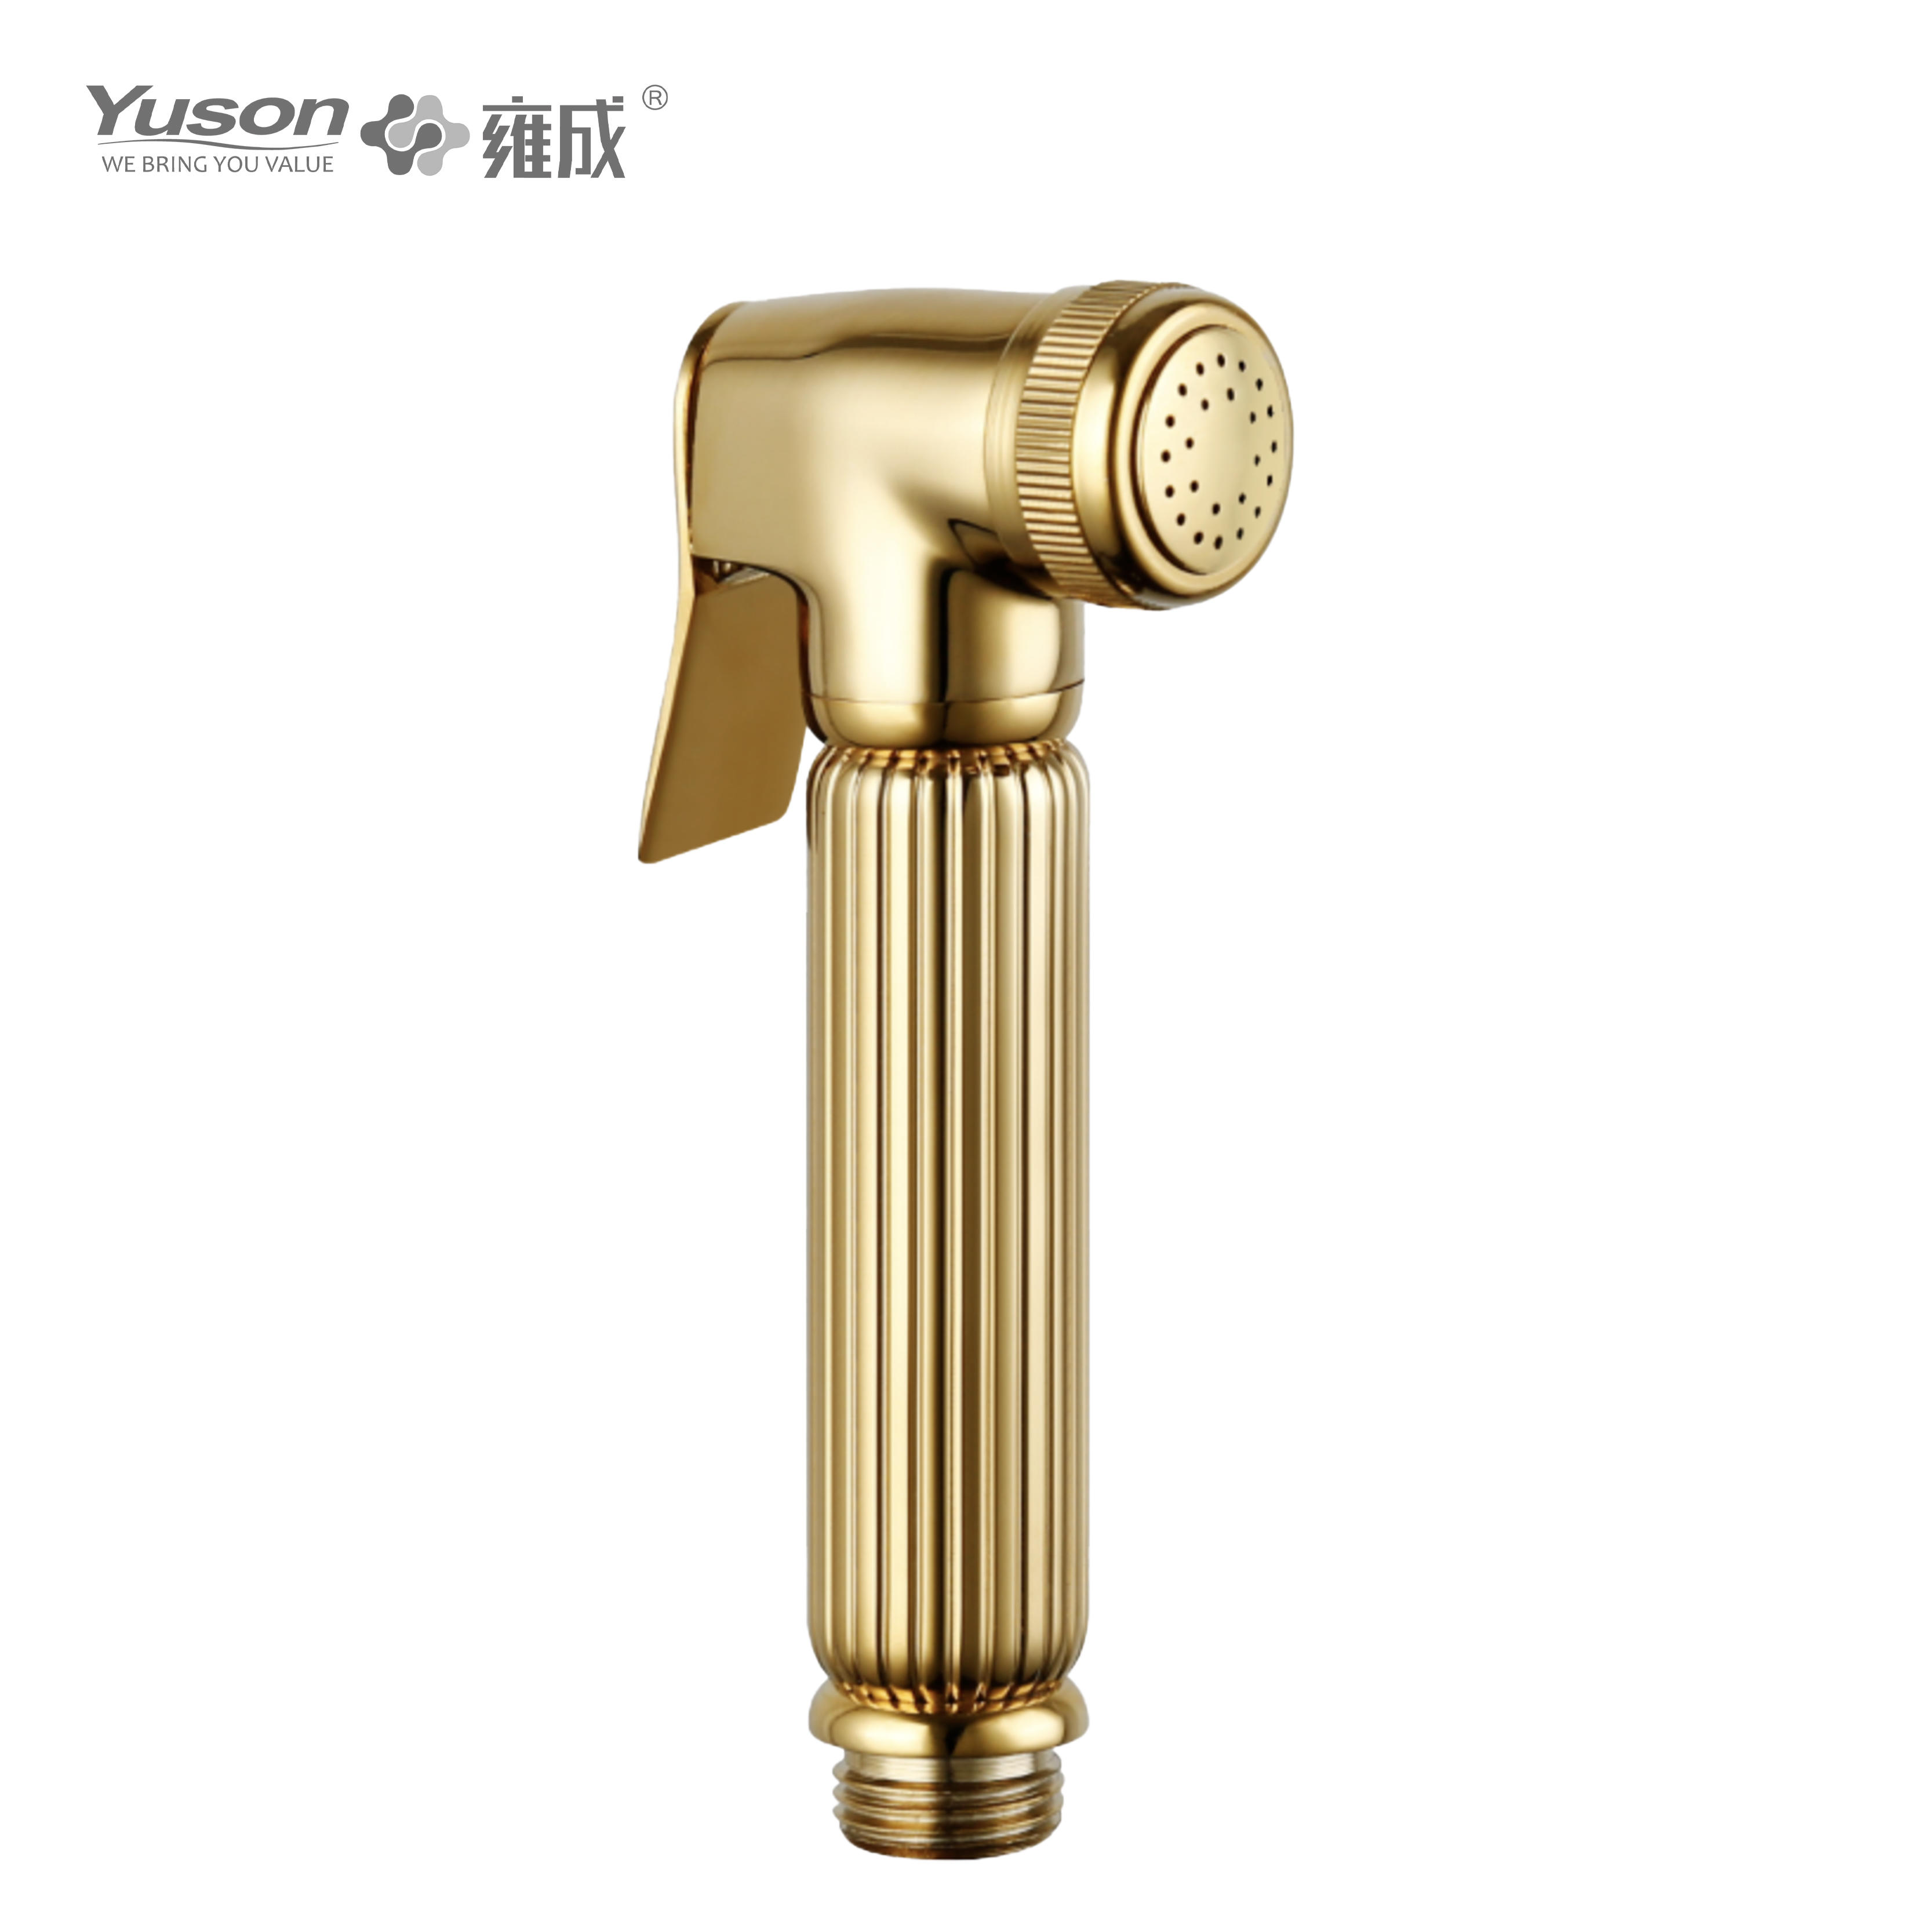 YS36424	Rustic Design Full Brass Handheld Toilet hygiene sprayer, Portable bidet Personal Cleansing Sprayer